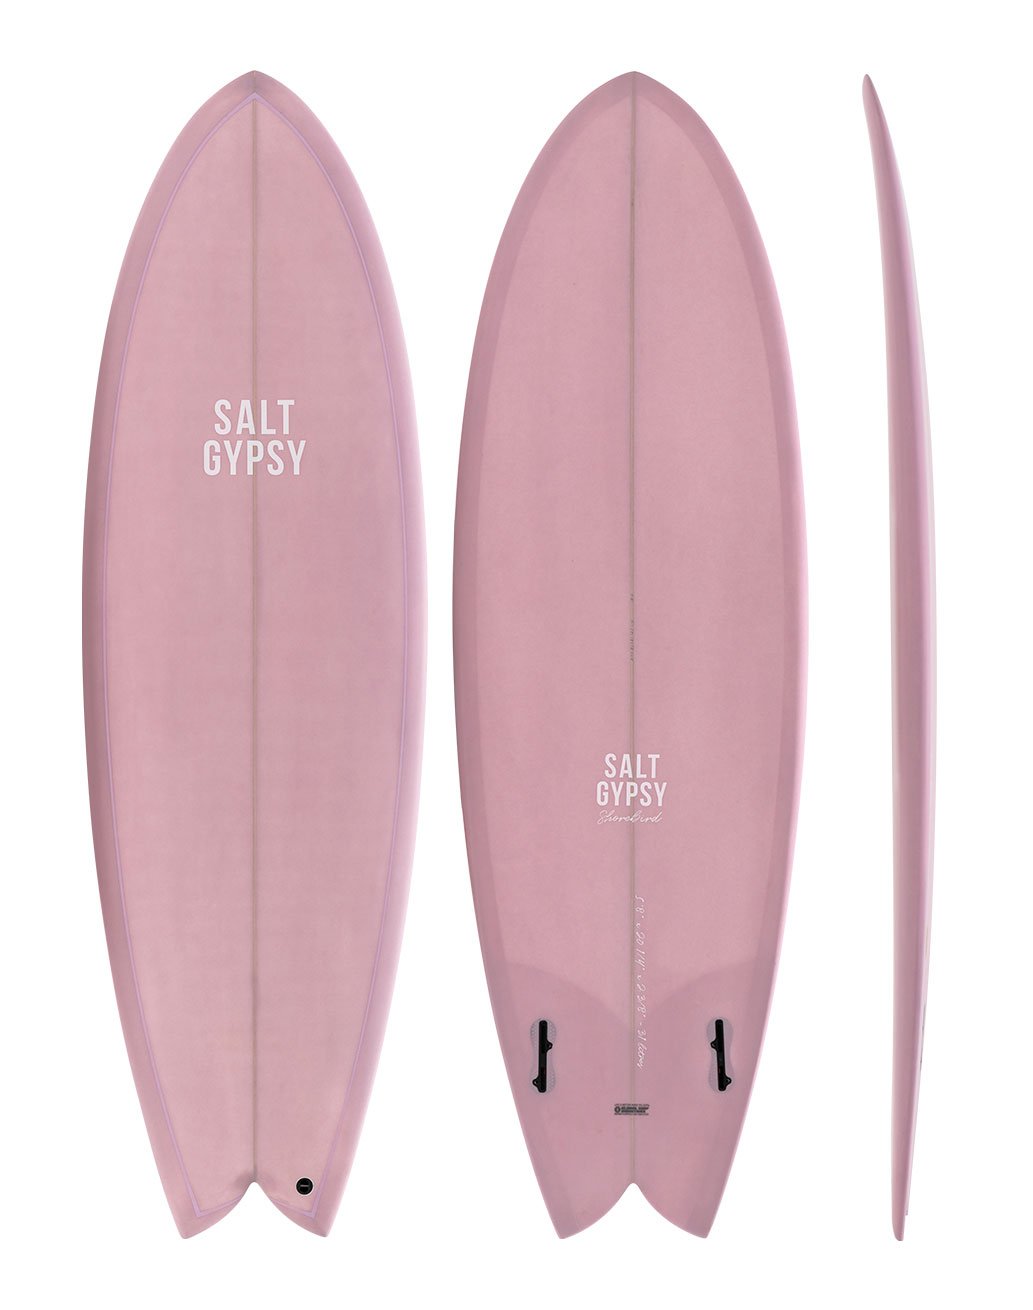 Salt Gypsy Surfboards - Shorebird dirty pink surfboard